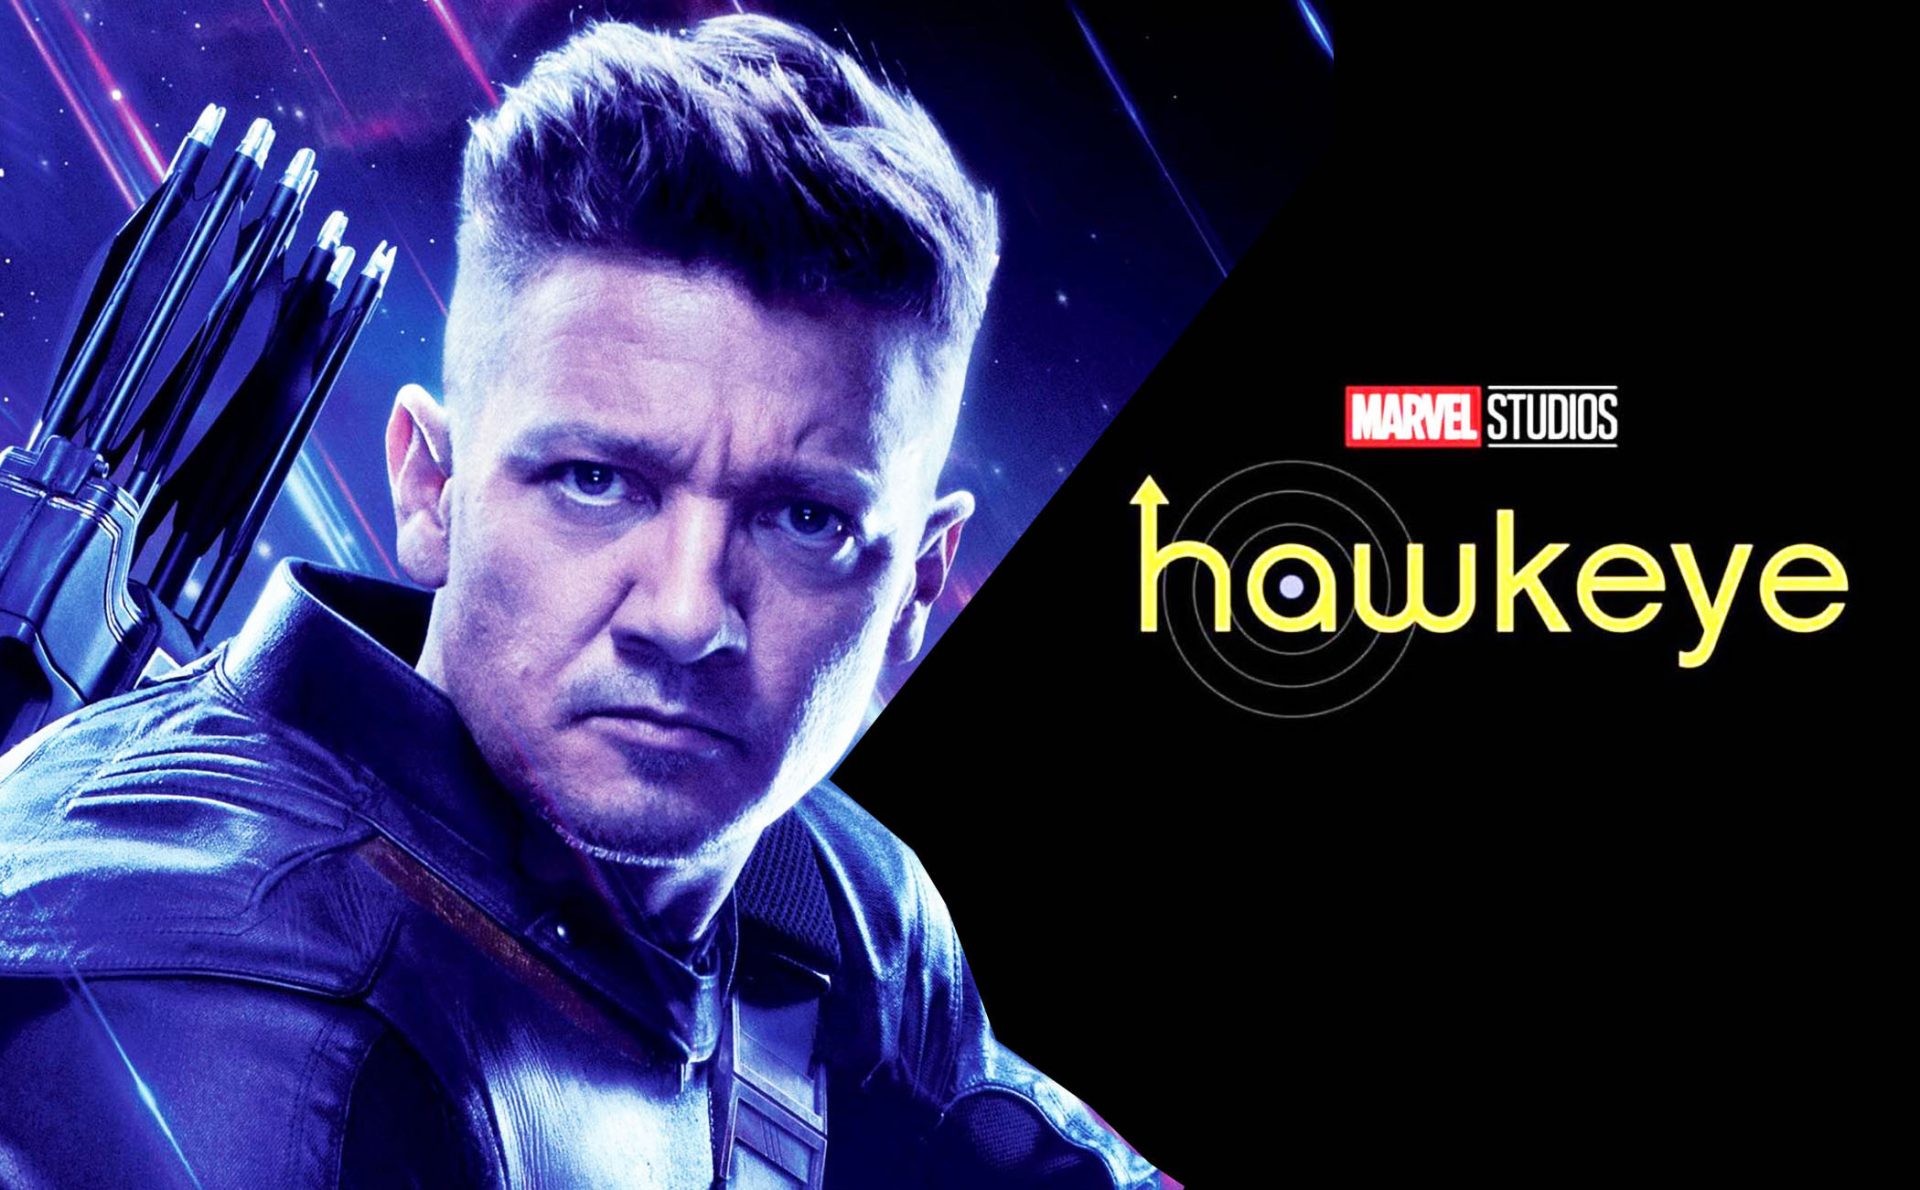 Hawkeye Season1 Episode1: Spoilers, Plot And Release Date